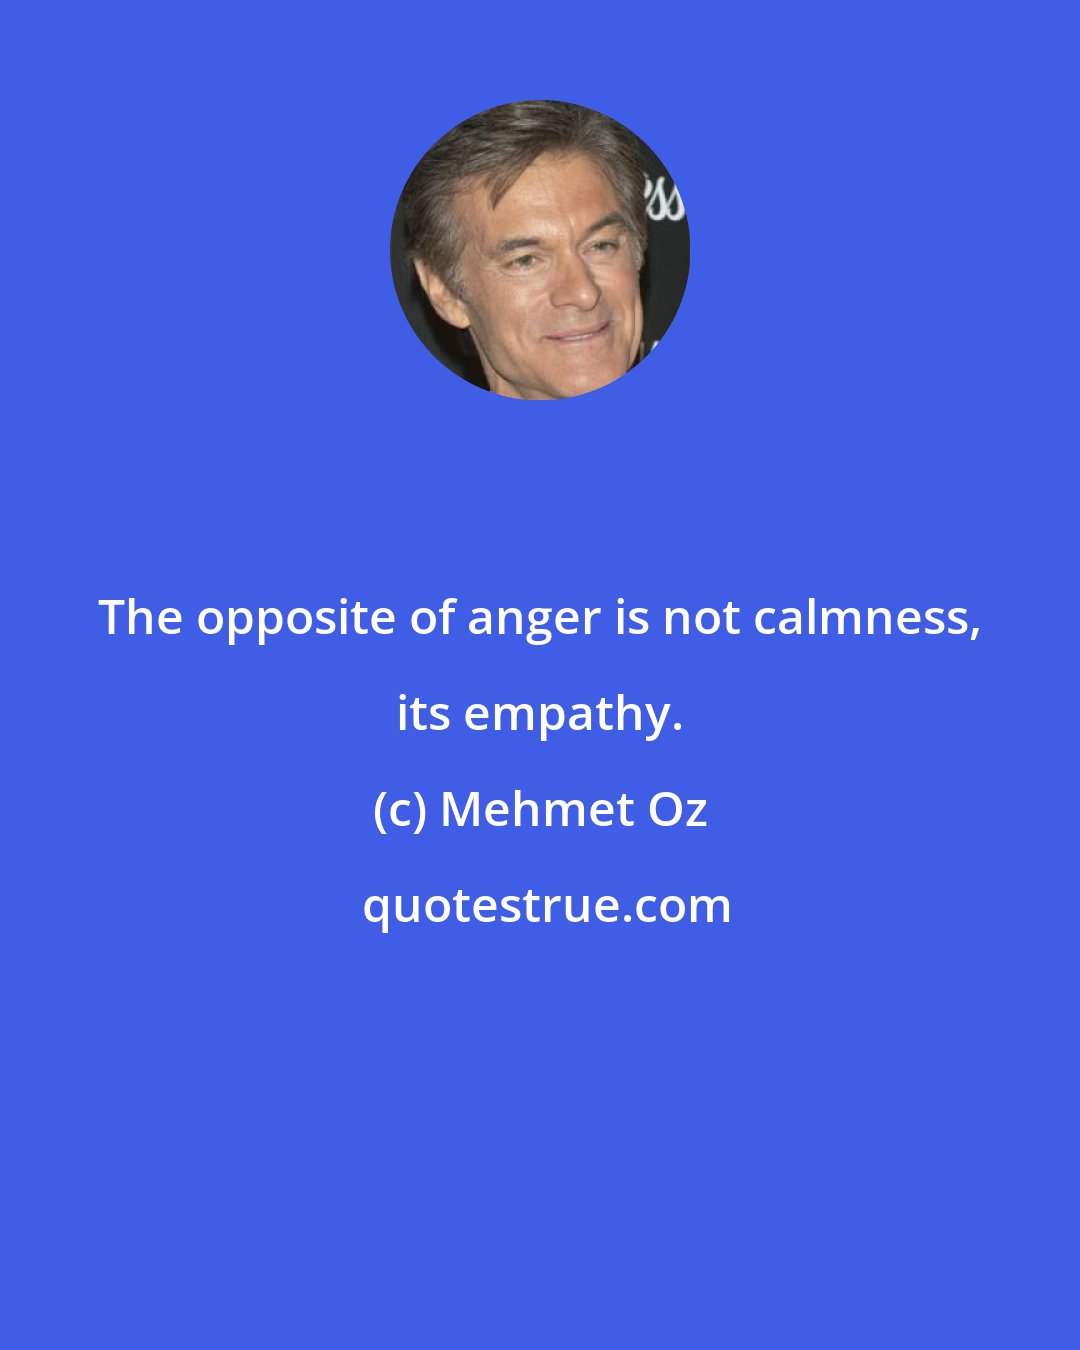 Mehmet Oz: The opposite of anger is not calmness, its empathy.